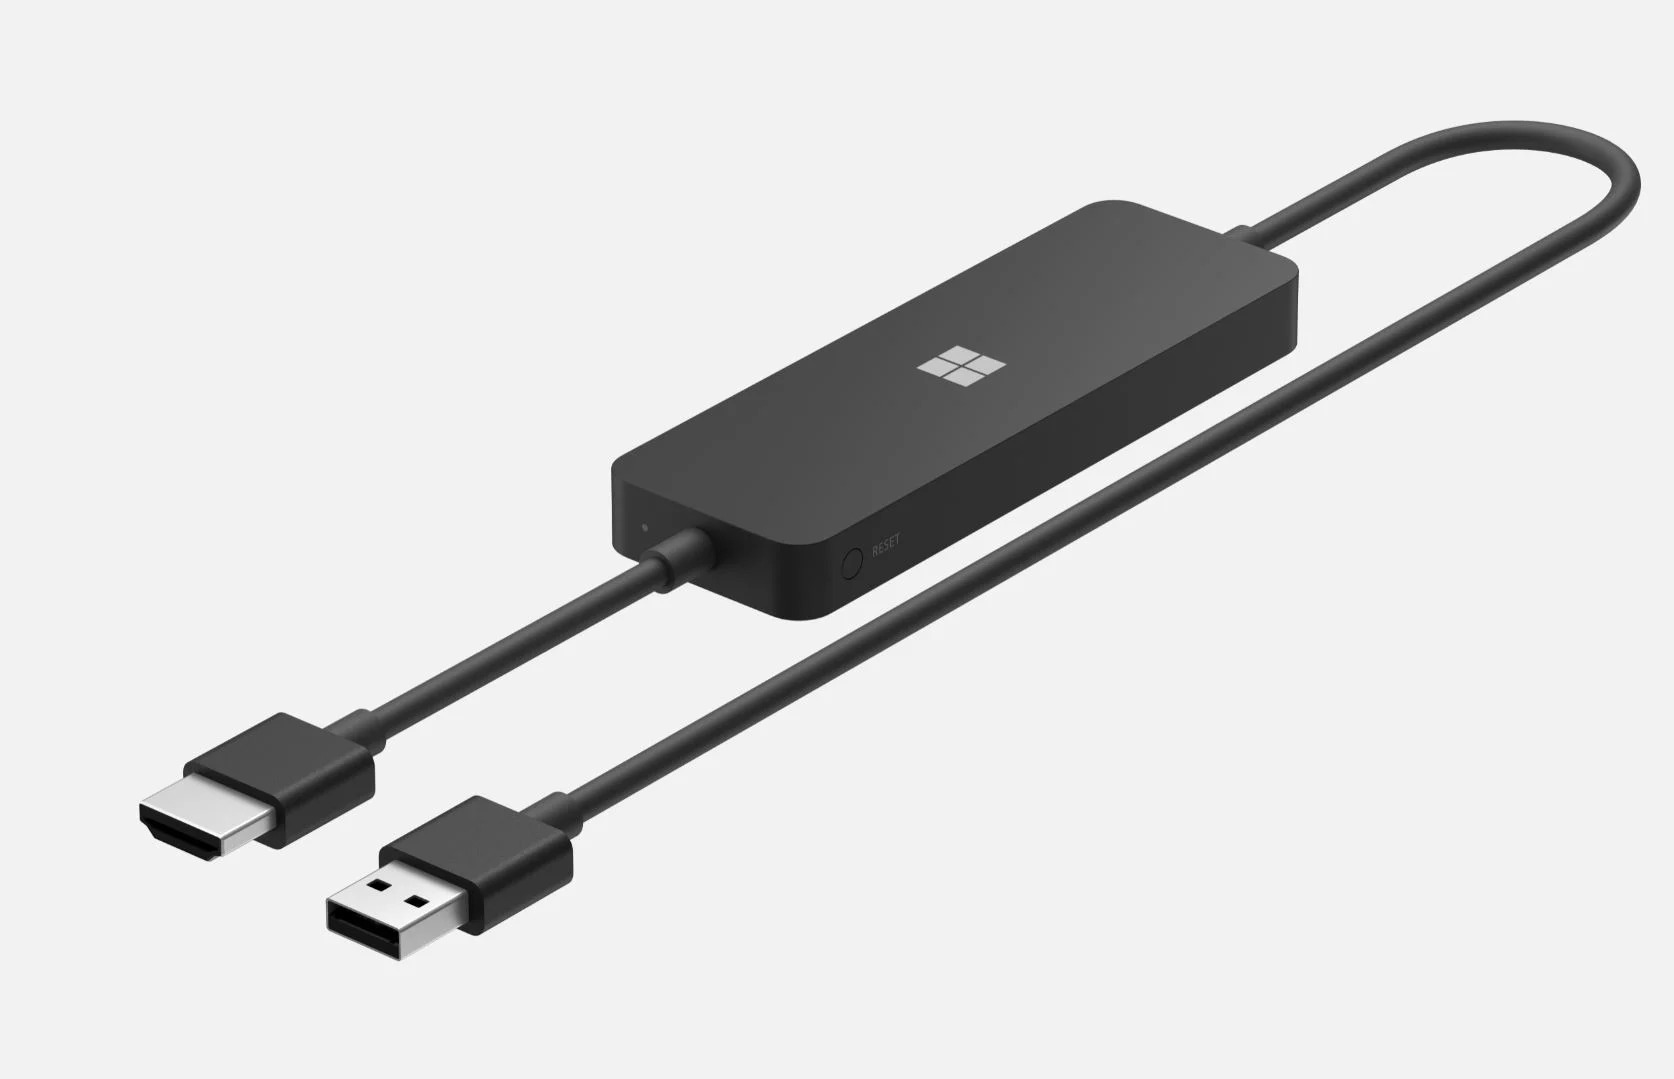 Microsoft Wireless Display Adapter : le modeste concurrent du Chromecast à la 4K